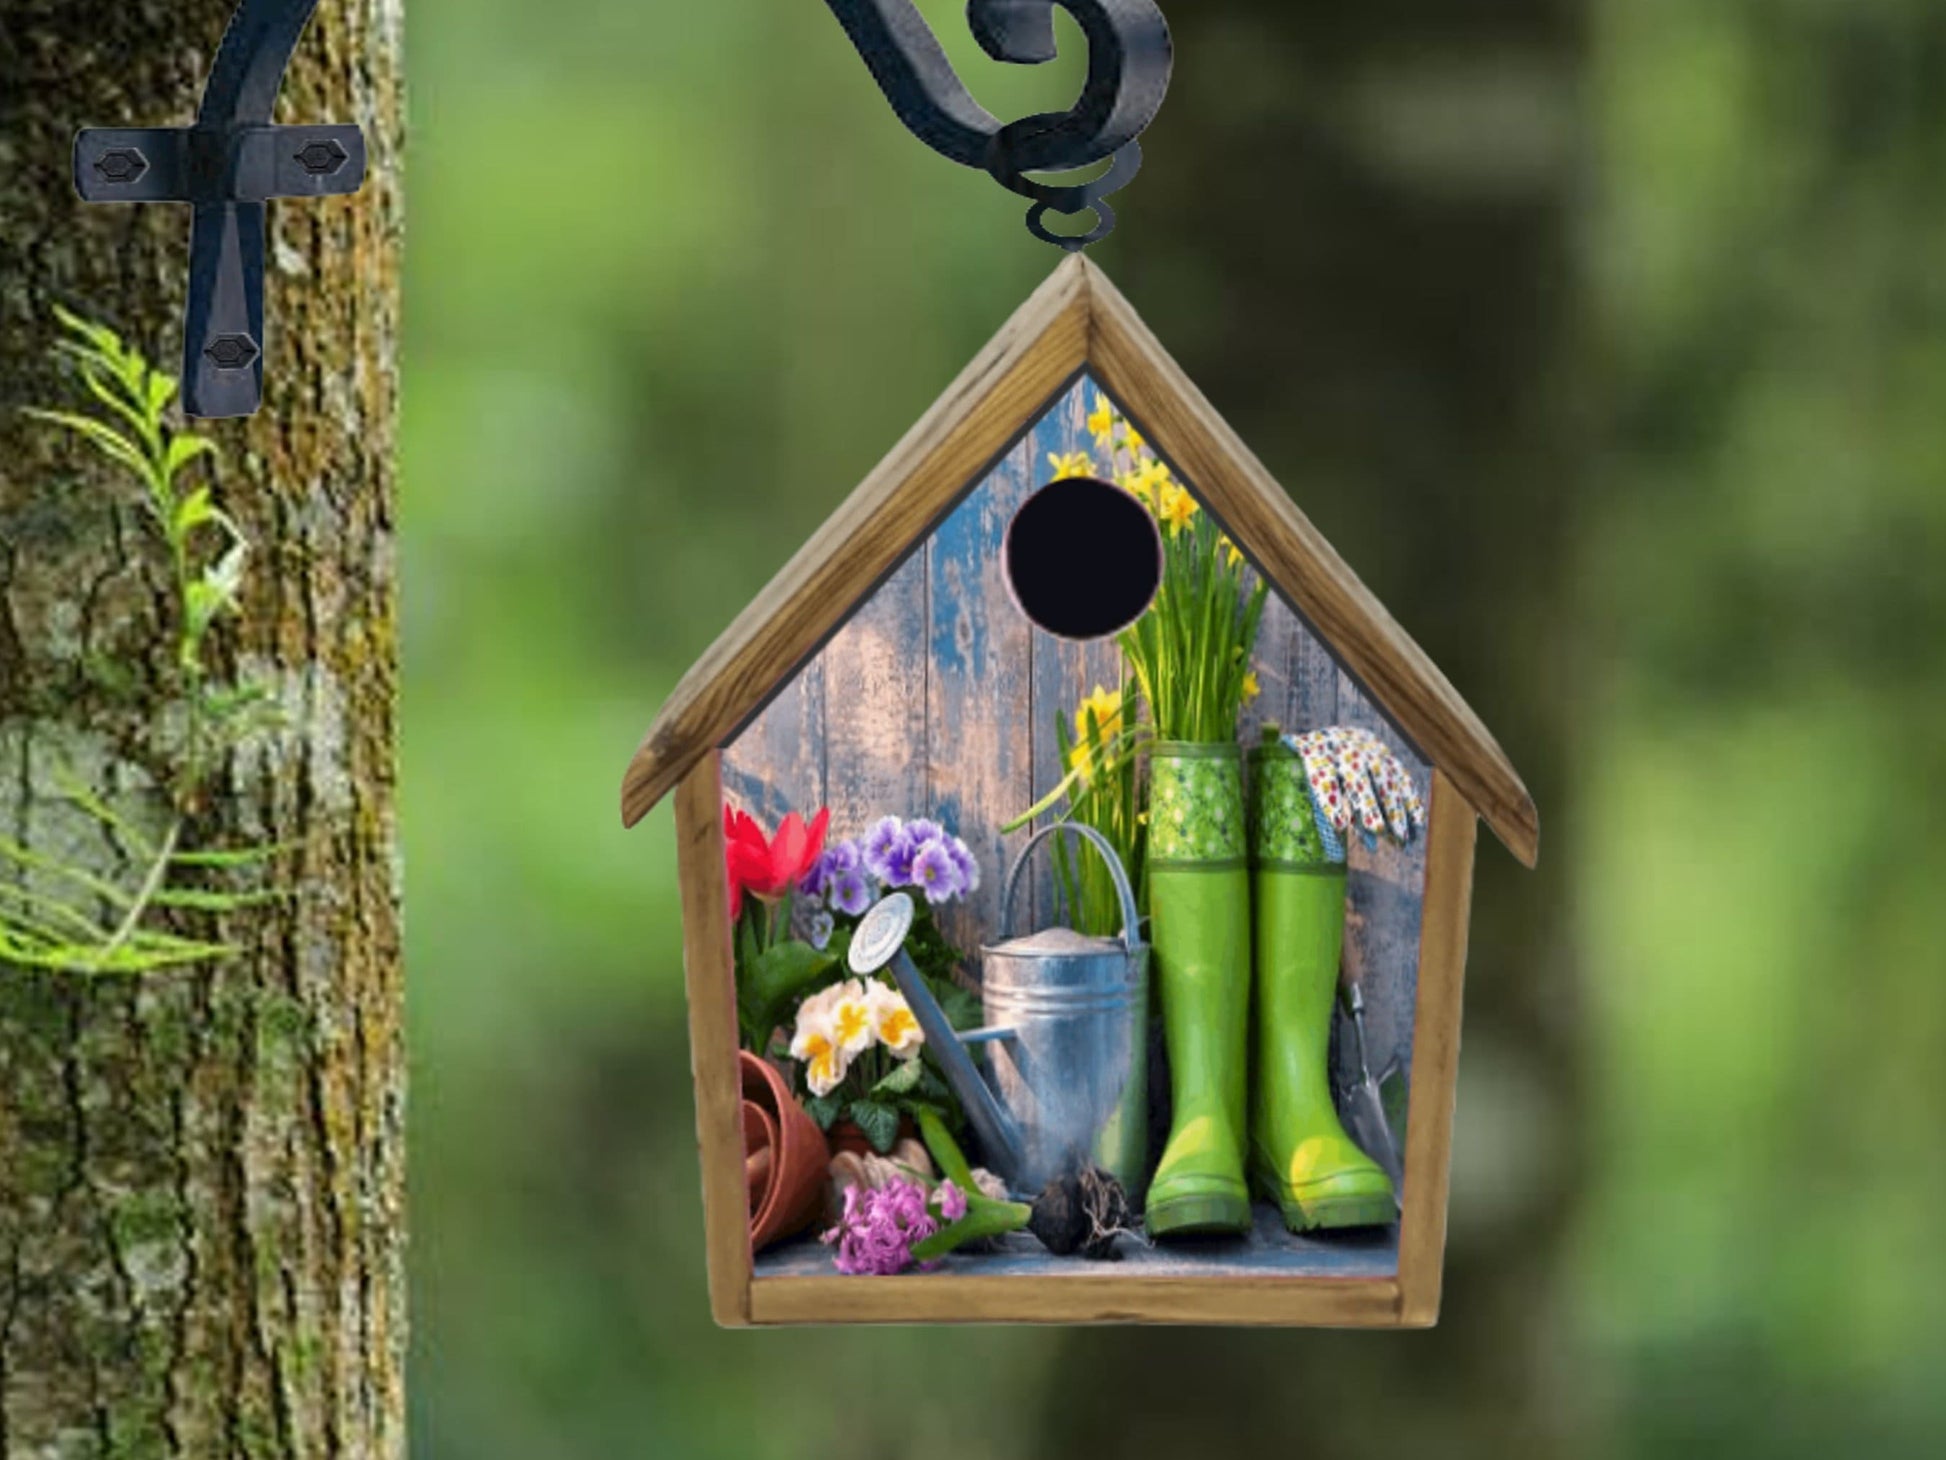 rustic birdhouse bird house handmade custom design sunflower seeds